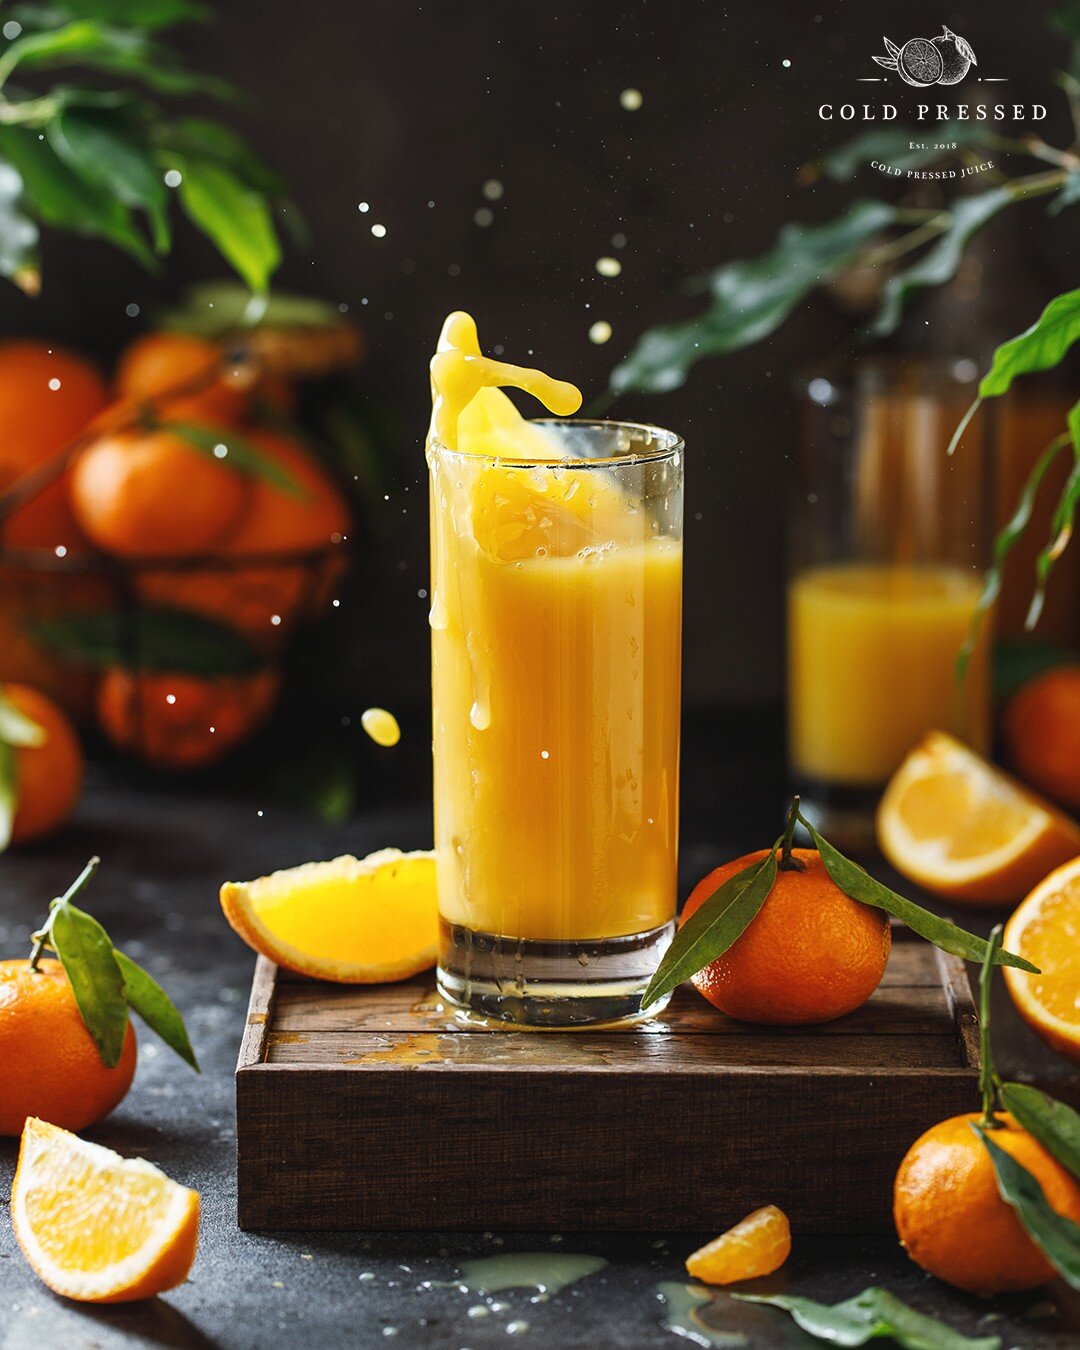 Taste the goodness of our 100% natural orange juice!
.
.
.
.
.
#Coldpressed #coldpressedjuice #lemonjuice #limejuice #orangejuice #gingerjuice #applejuice #beetrootjuice #orangejuice #greenjuice #appelsinjuice #limejuice #sitronjuice #ingef&aelig;rju